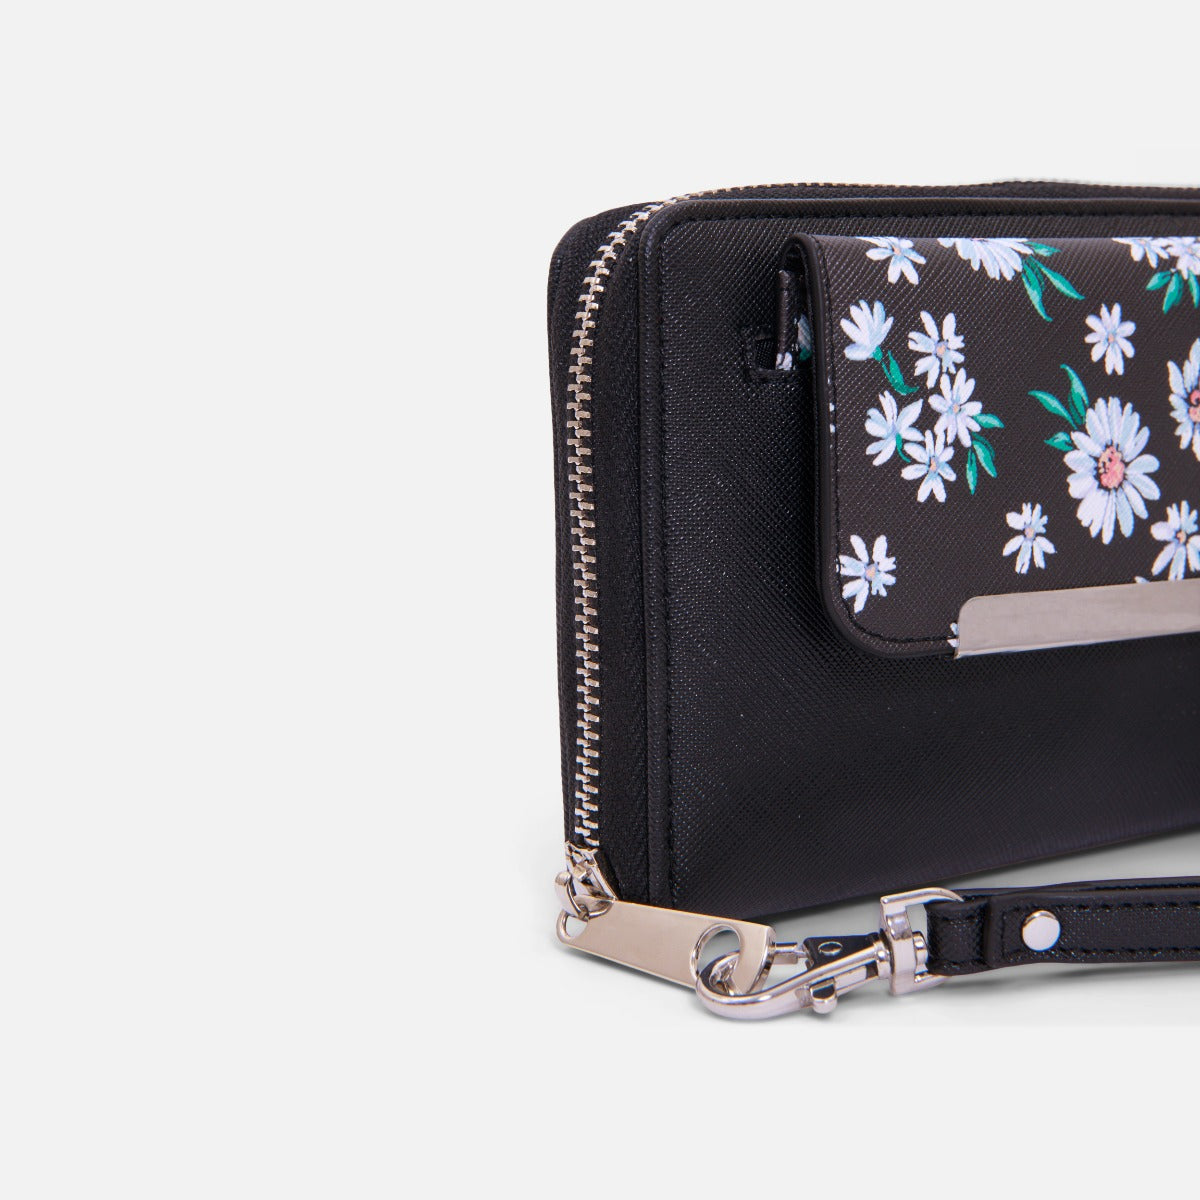 Black wallet with flower print flap pocket